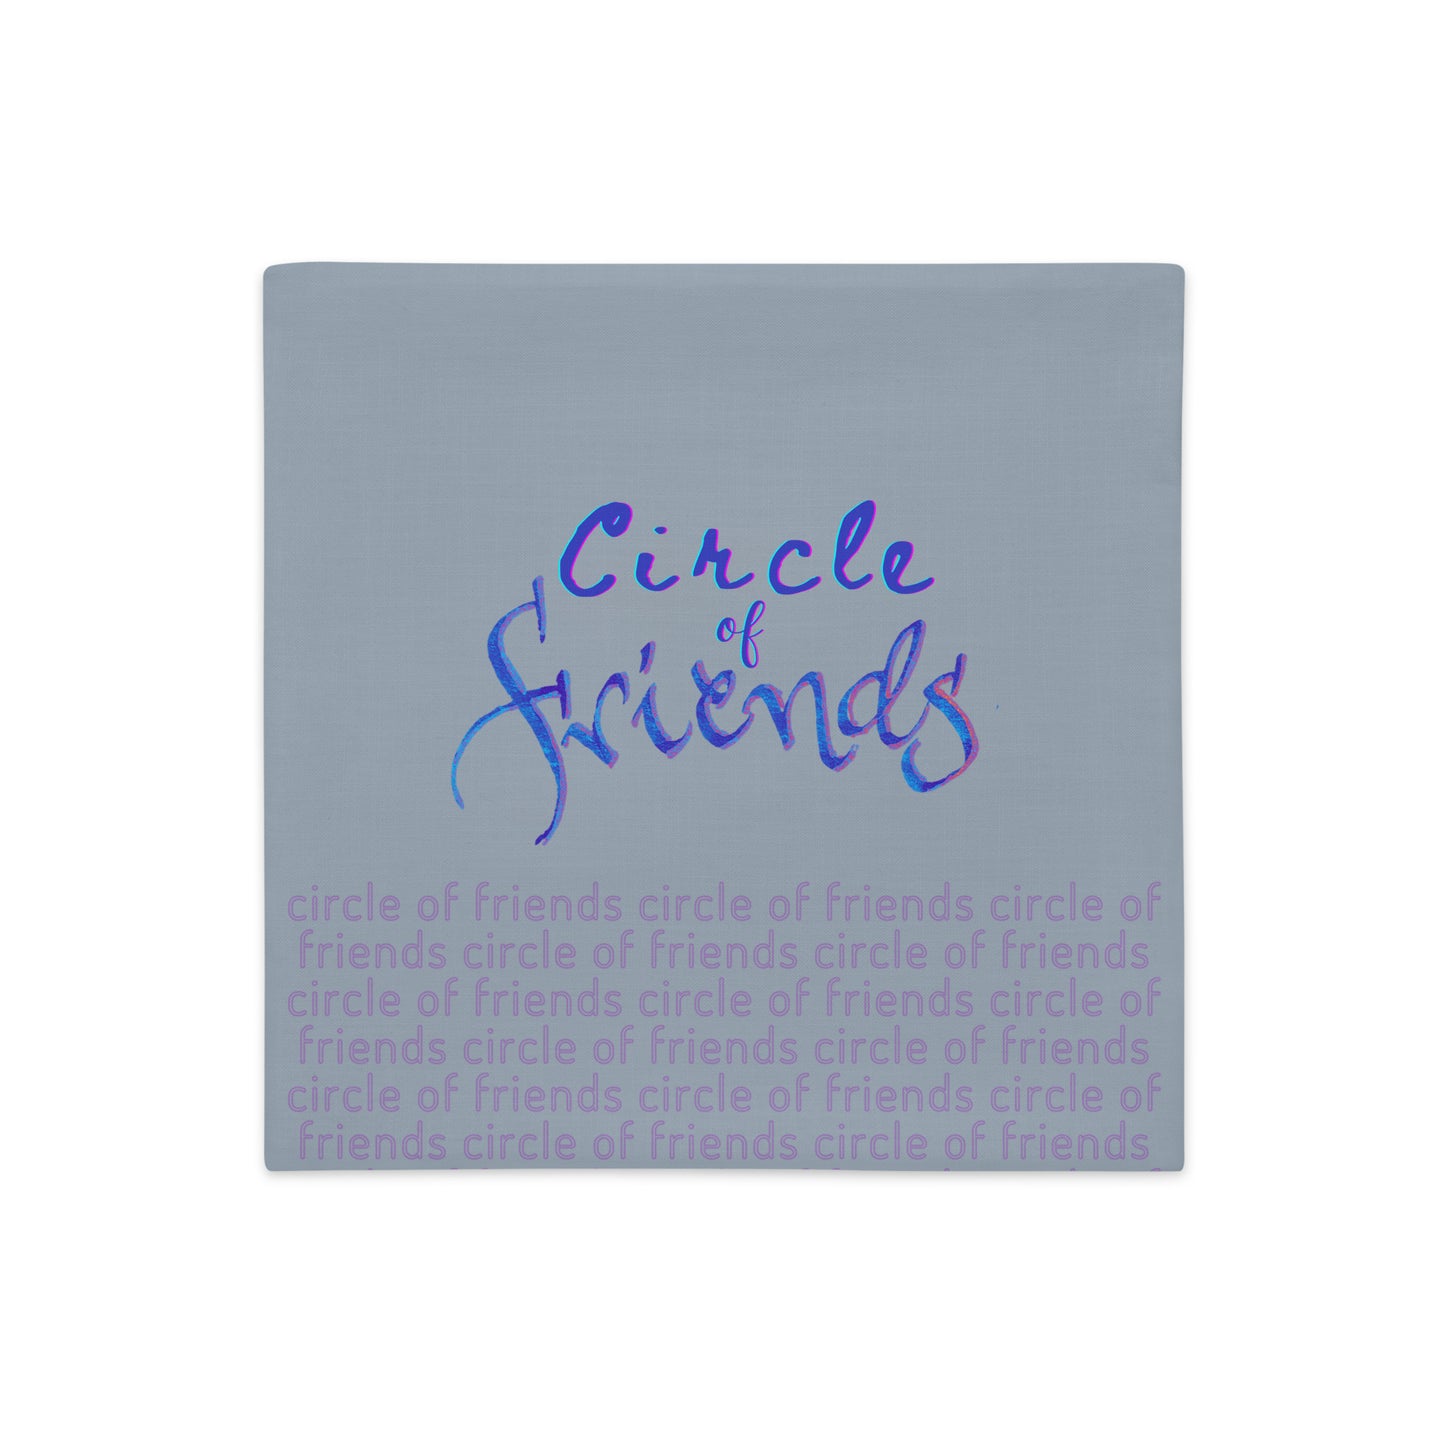 Circle of Friends: Premium Throw Cushions Covers 18"x18"